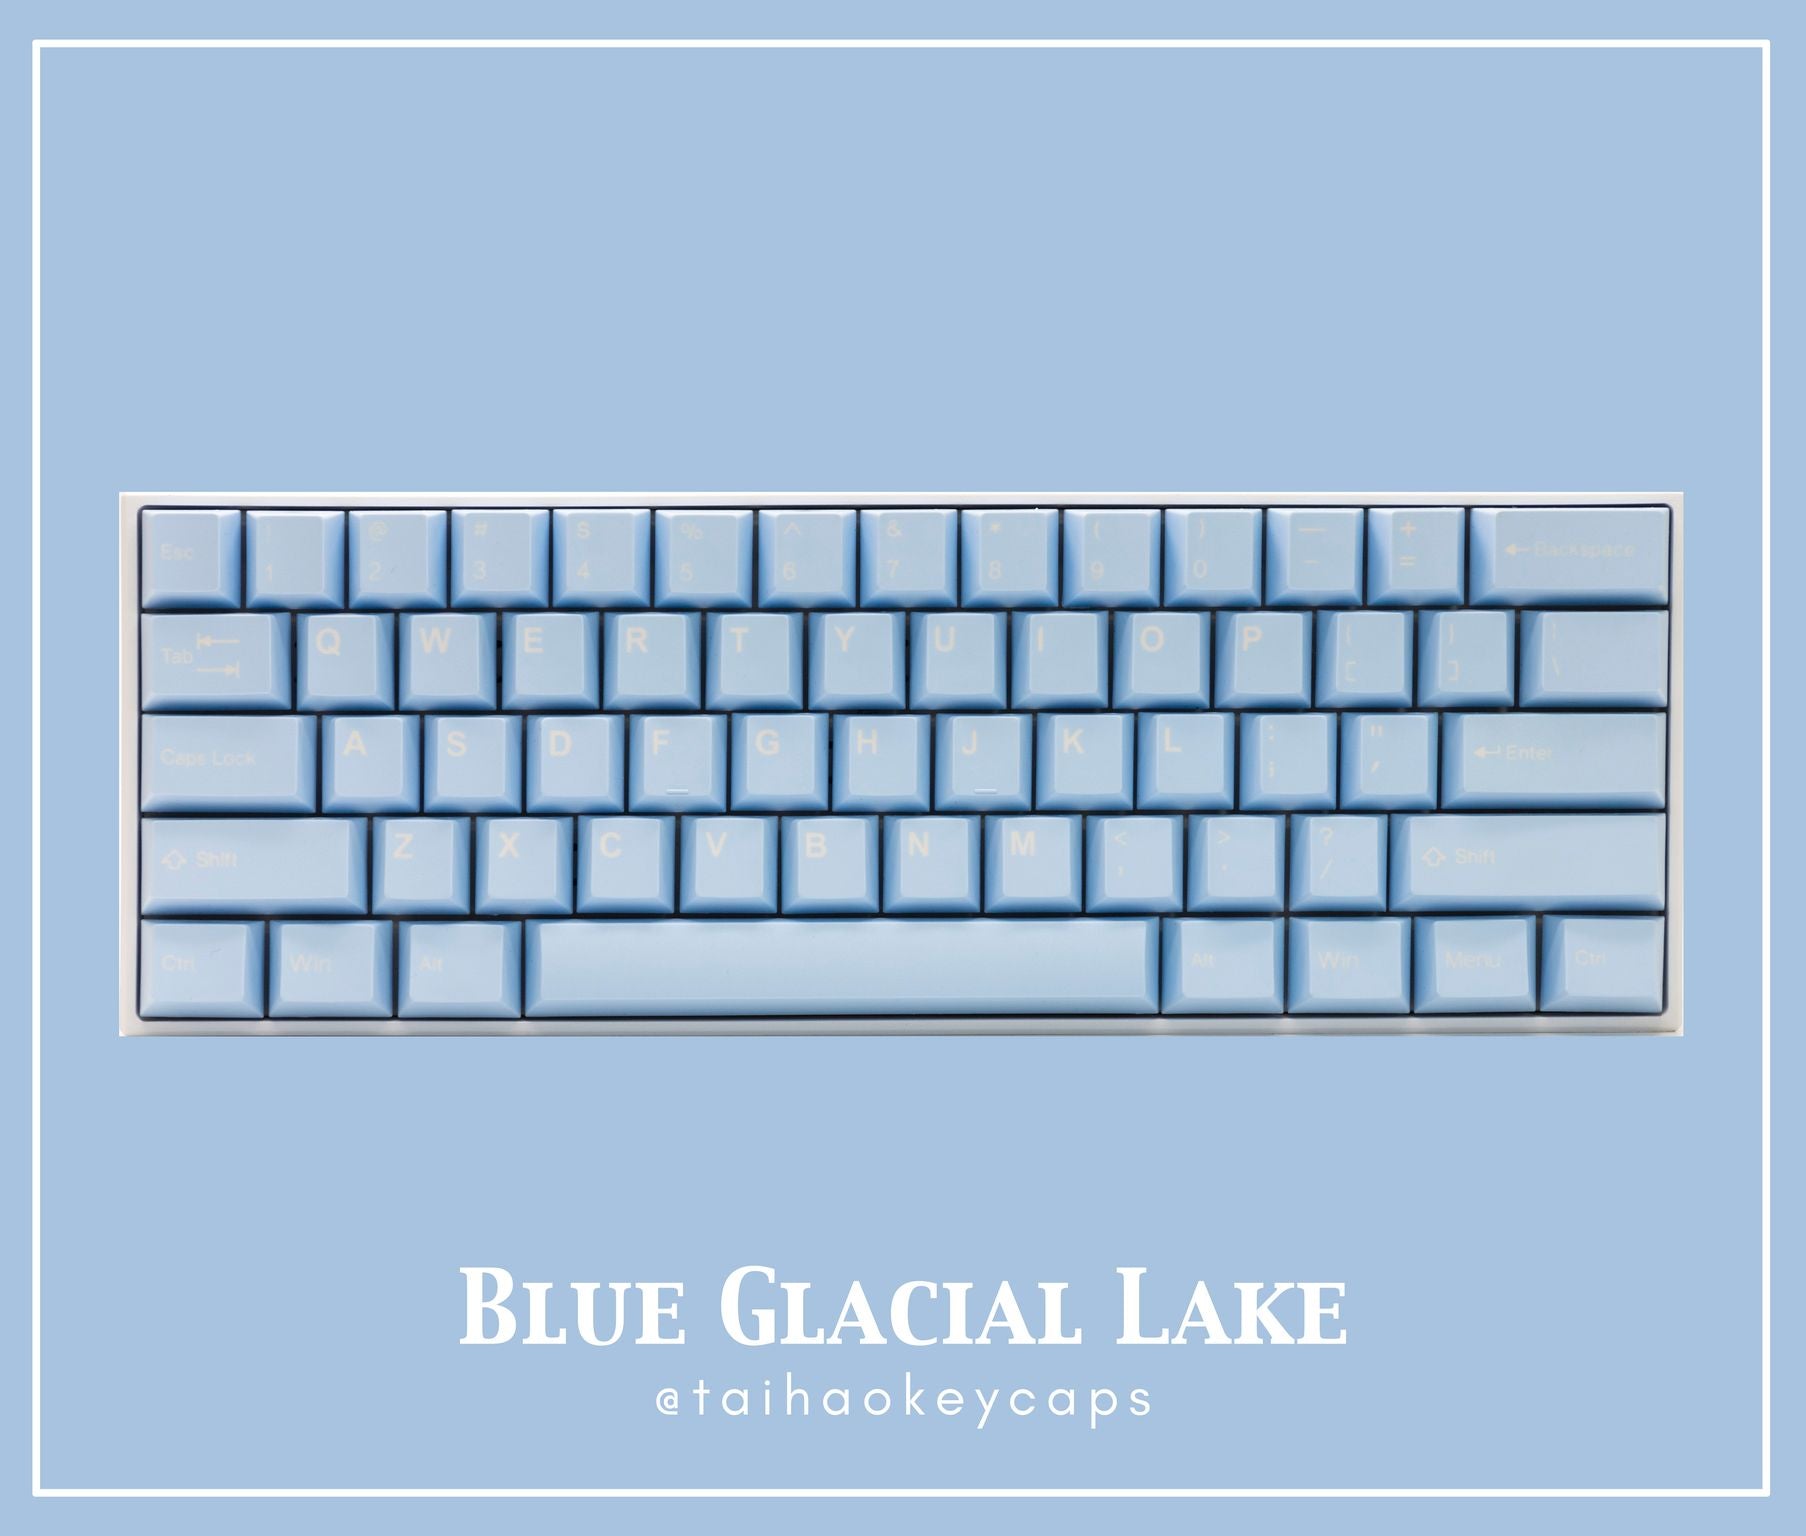 Tai-Hao 150 Key ABS Double Shot Cubic Keycap Set Blue Glacial Lake MKCNH5N5L0 |0|